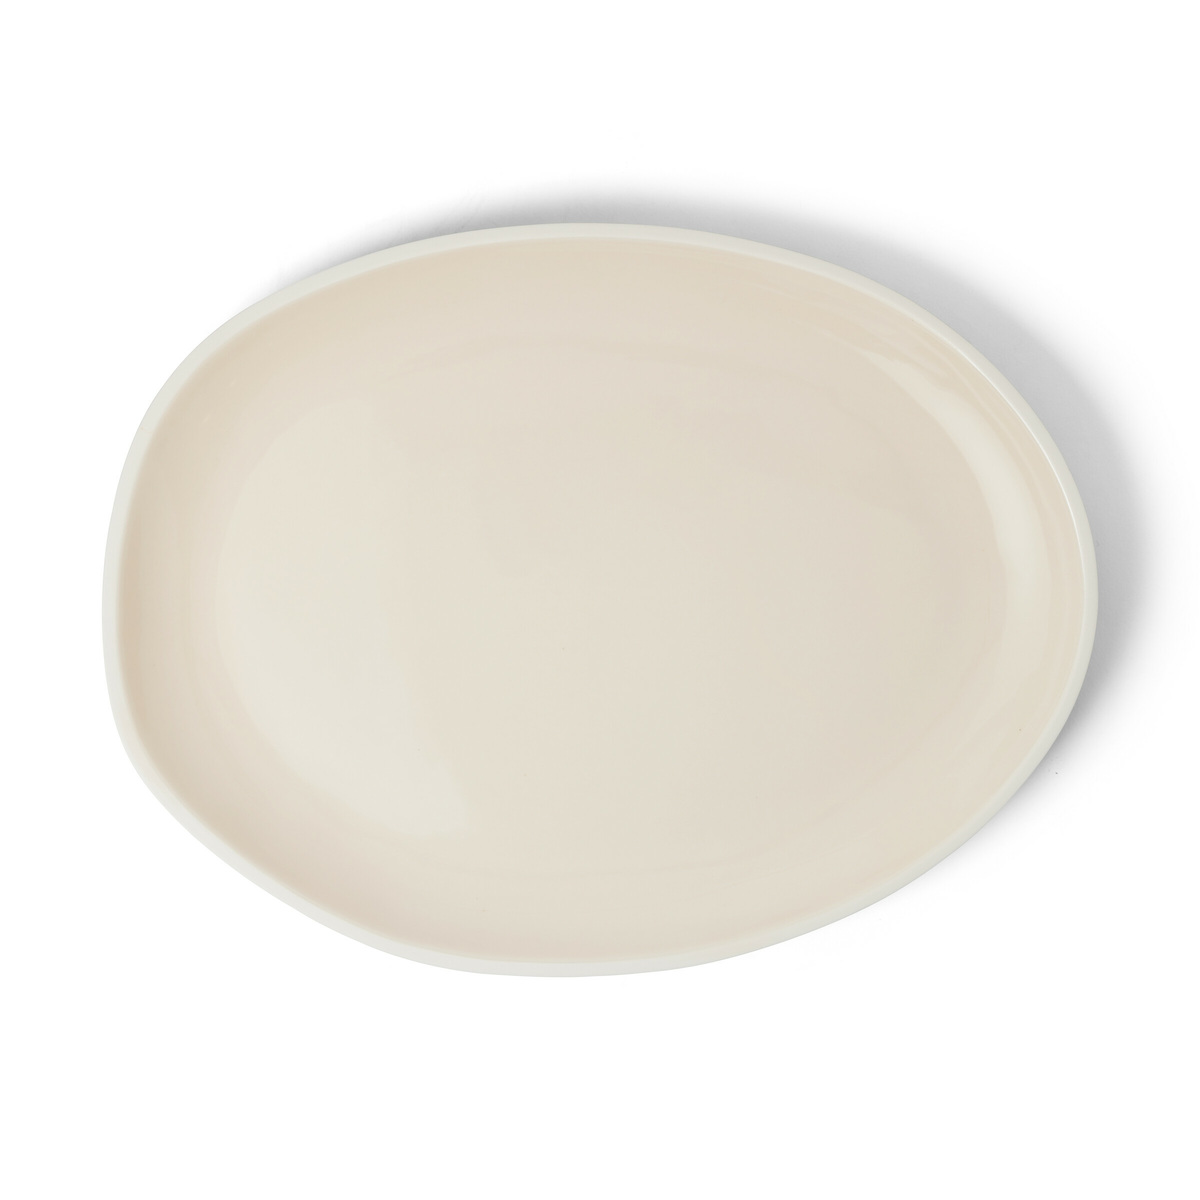 Platter Sicilia, Off-White platter - L43 x 32 cm - Ceramic - image 1